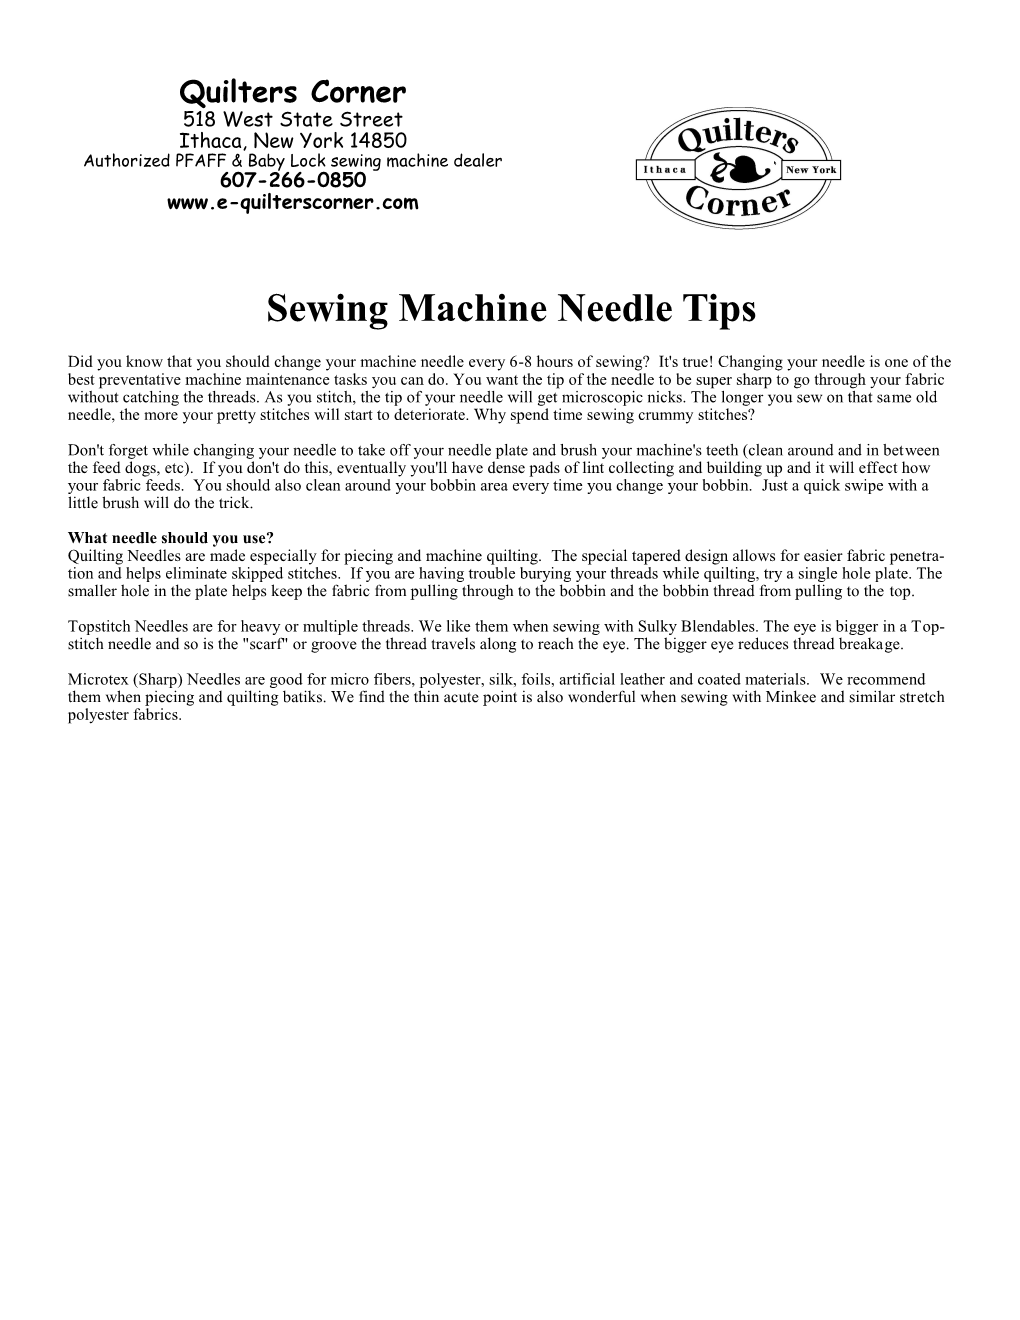 Sewing Machine Needle Tips